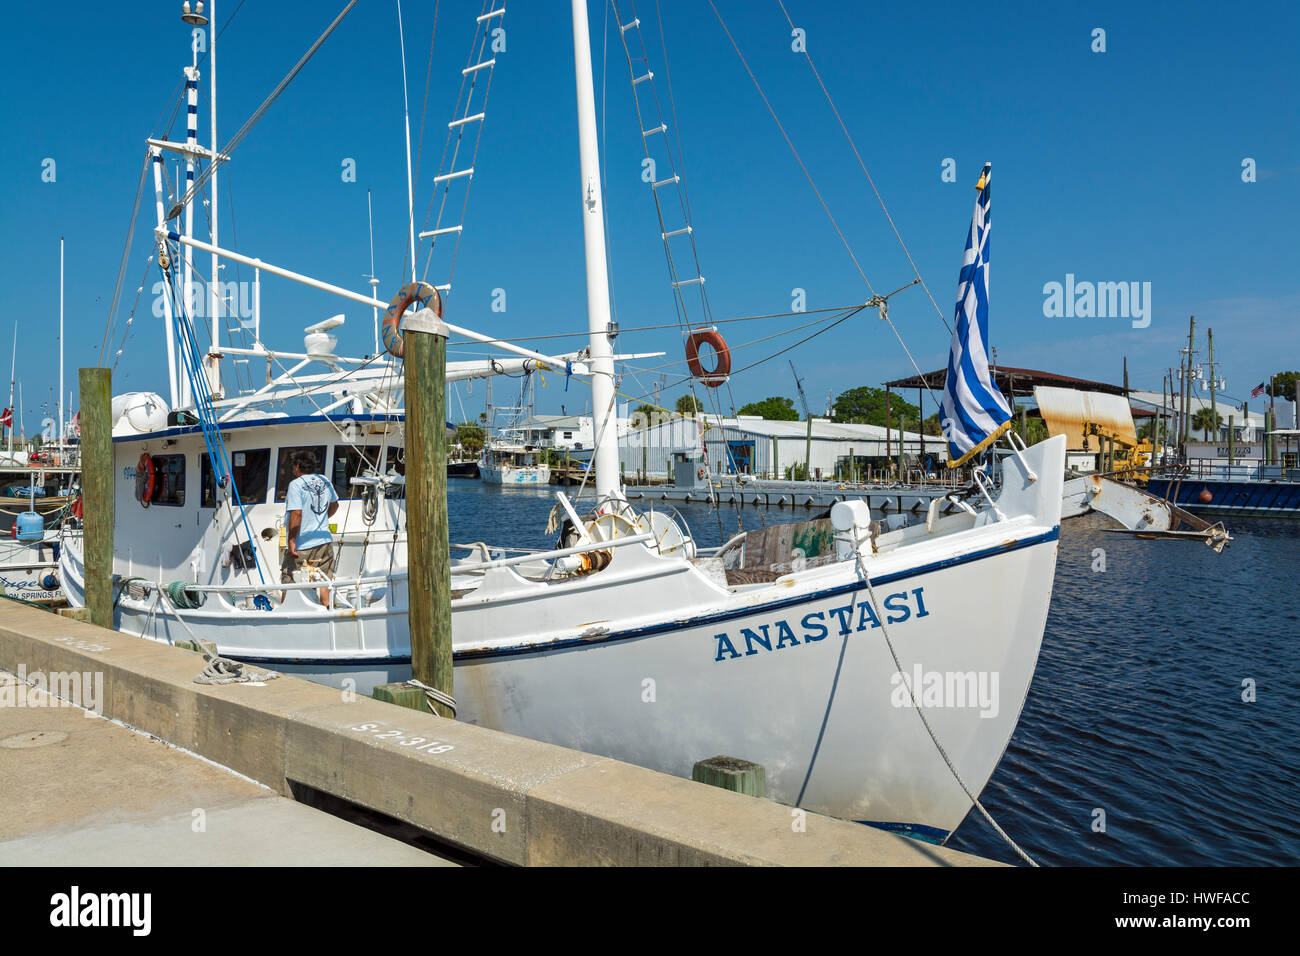 Florida, Tarpon Springs, sponge diving boat, owner/captain on deck Stock Photo